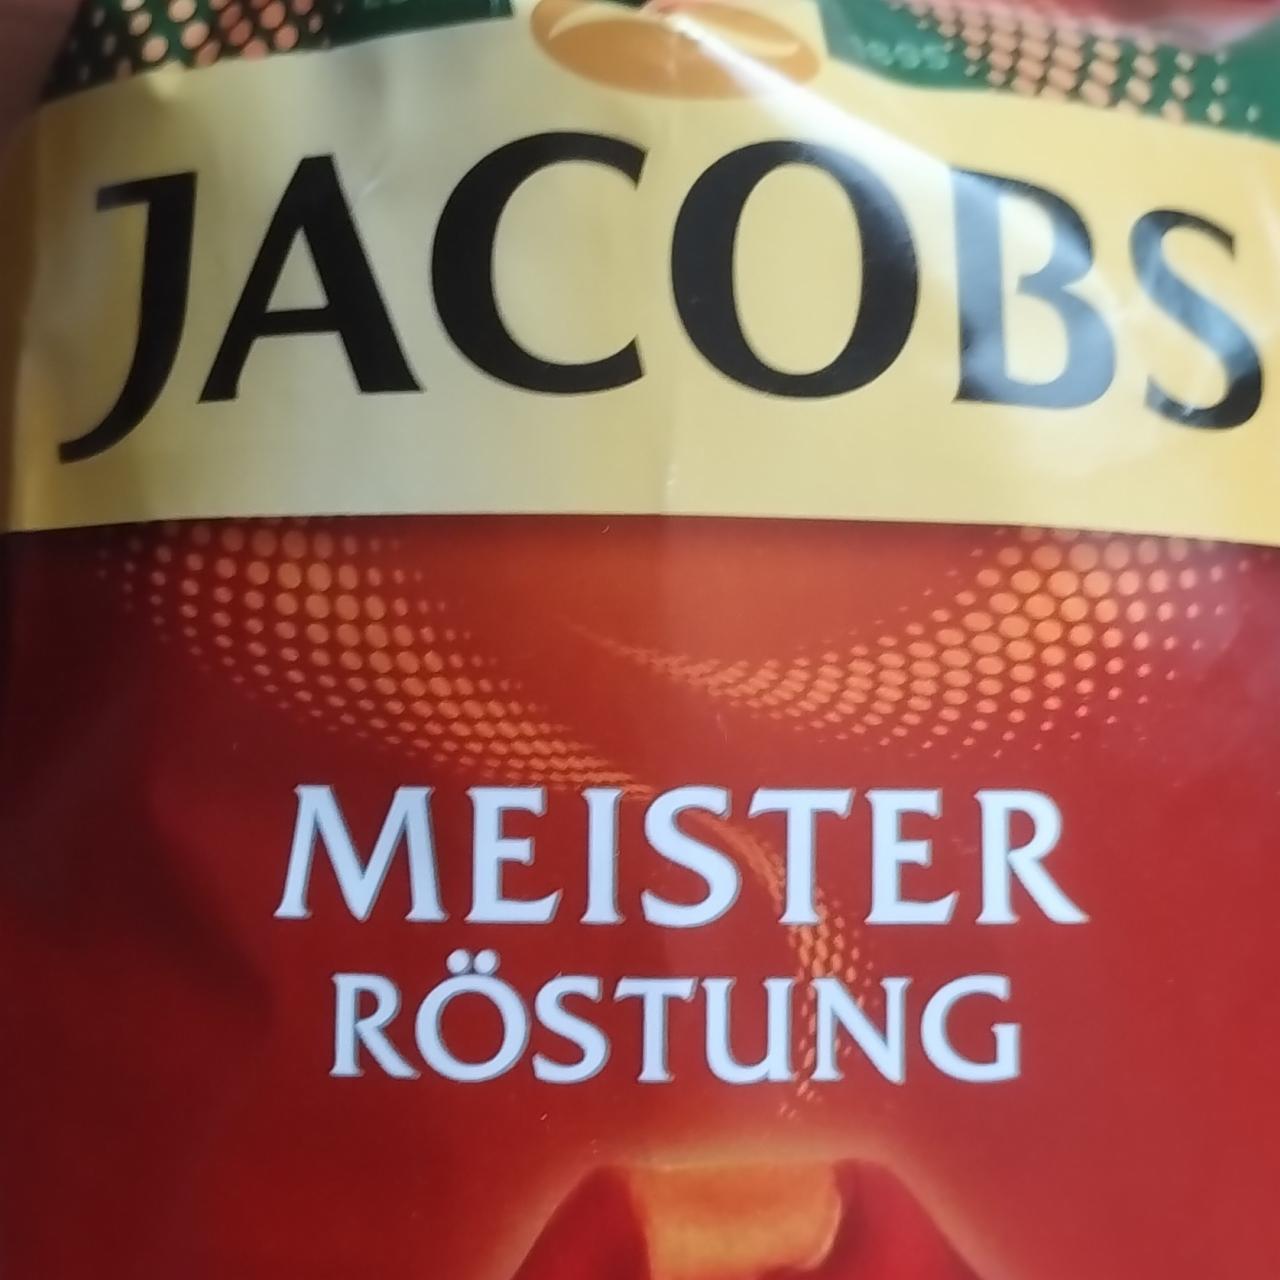 Fotografie - Meister Röstung Jacobs